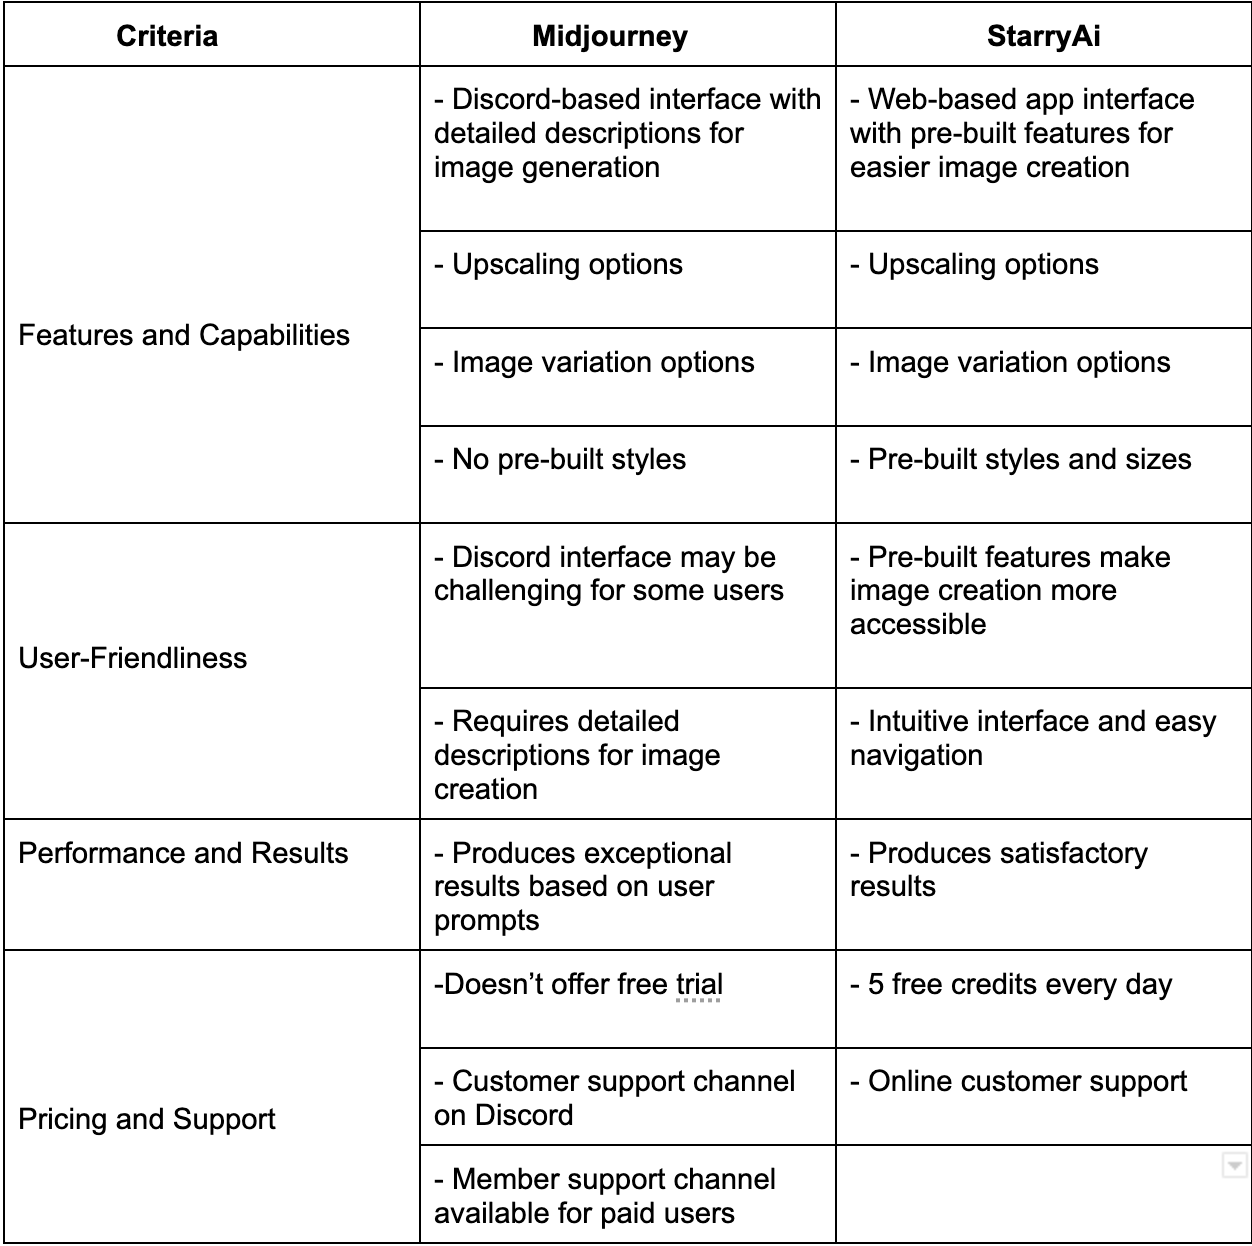 midjourney vs starryai comparison table 